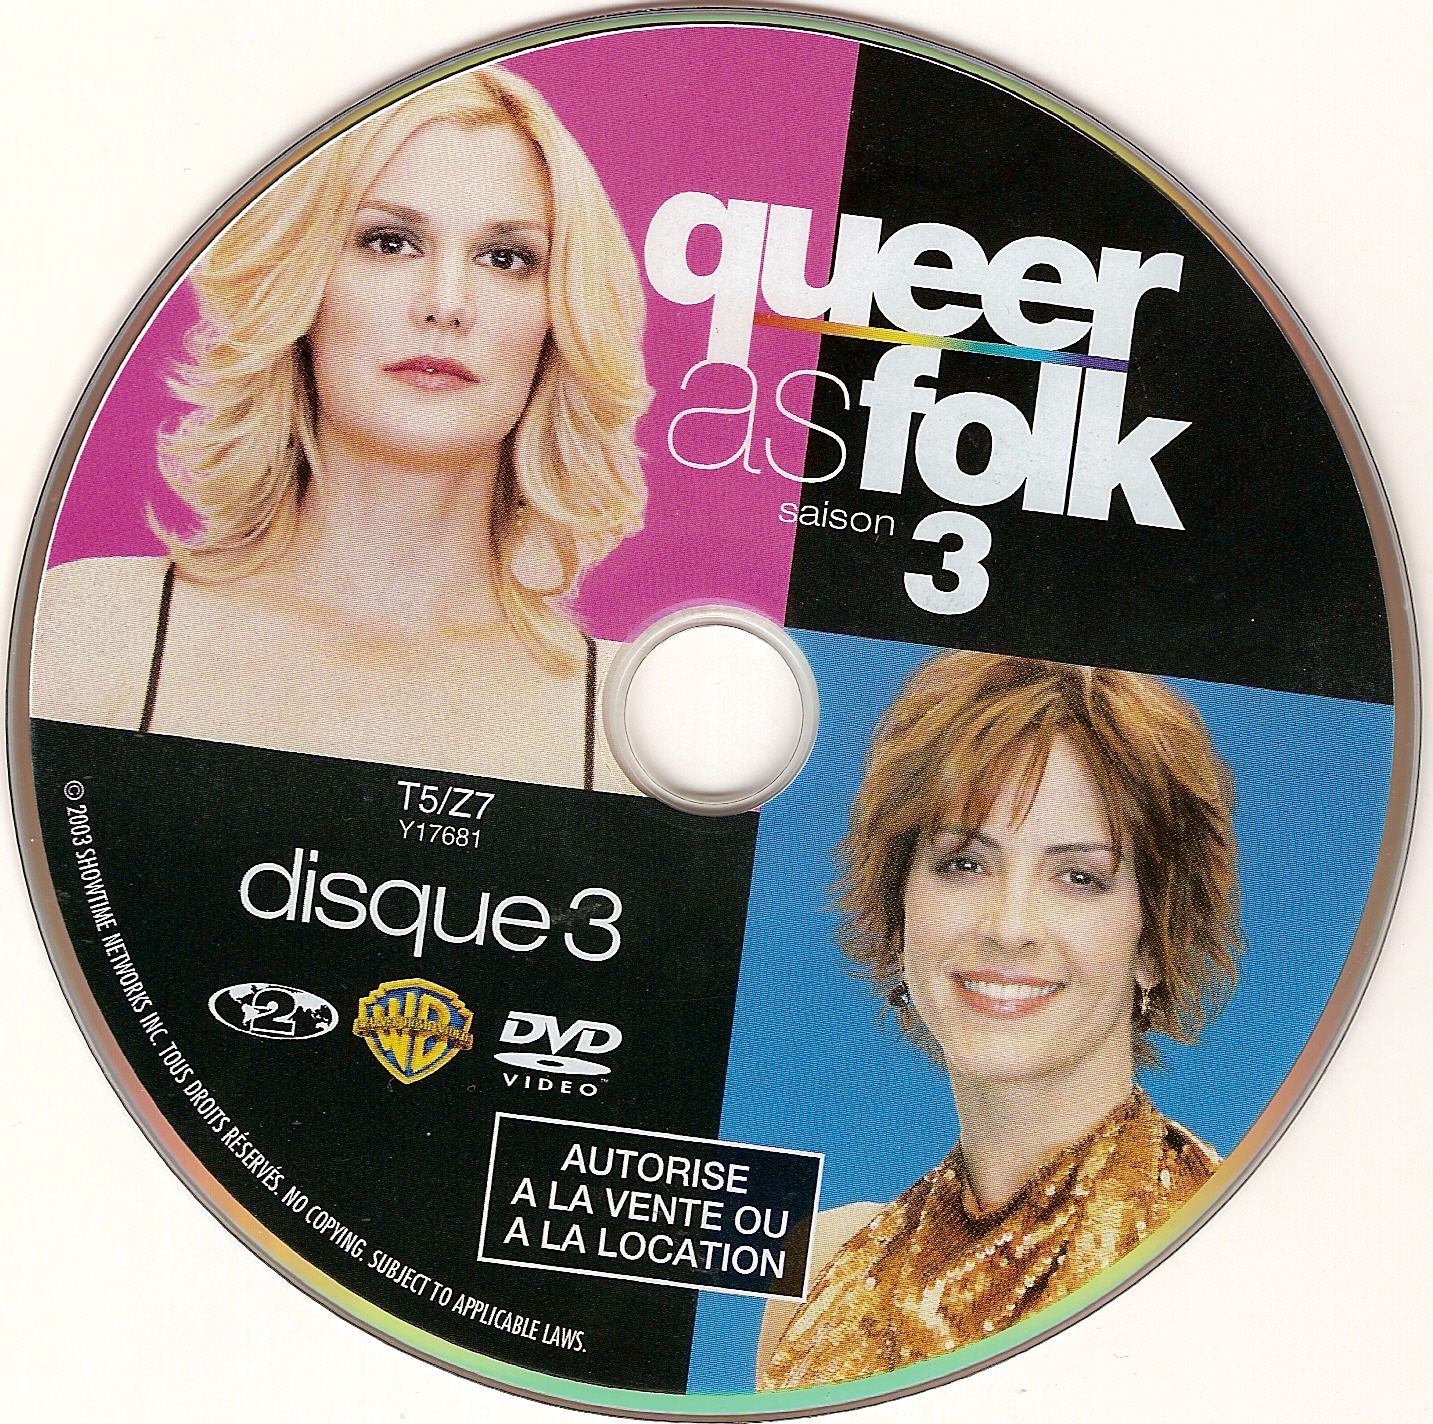 Queer as folk Saison 3 DISC 3